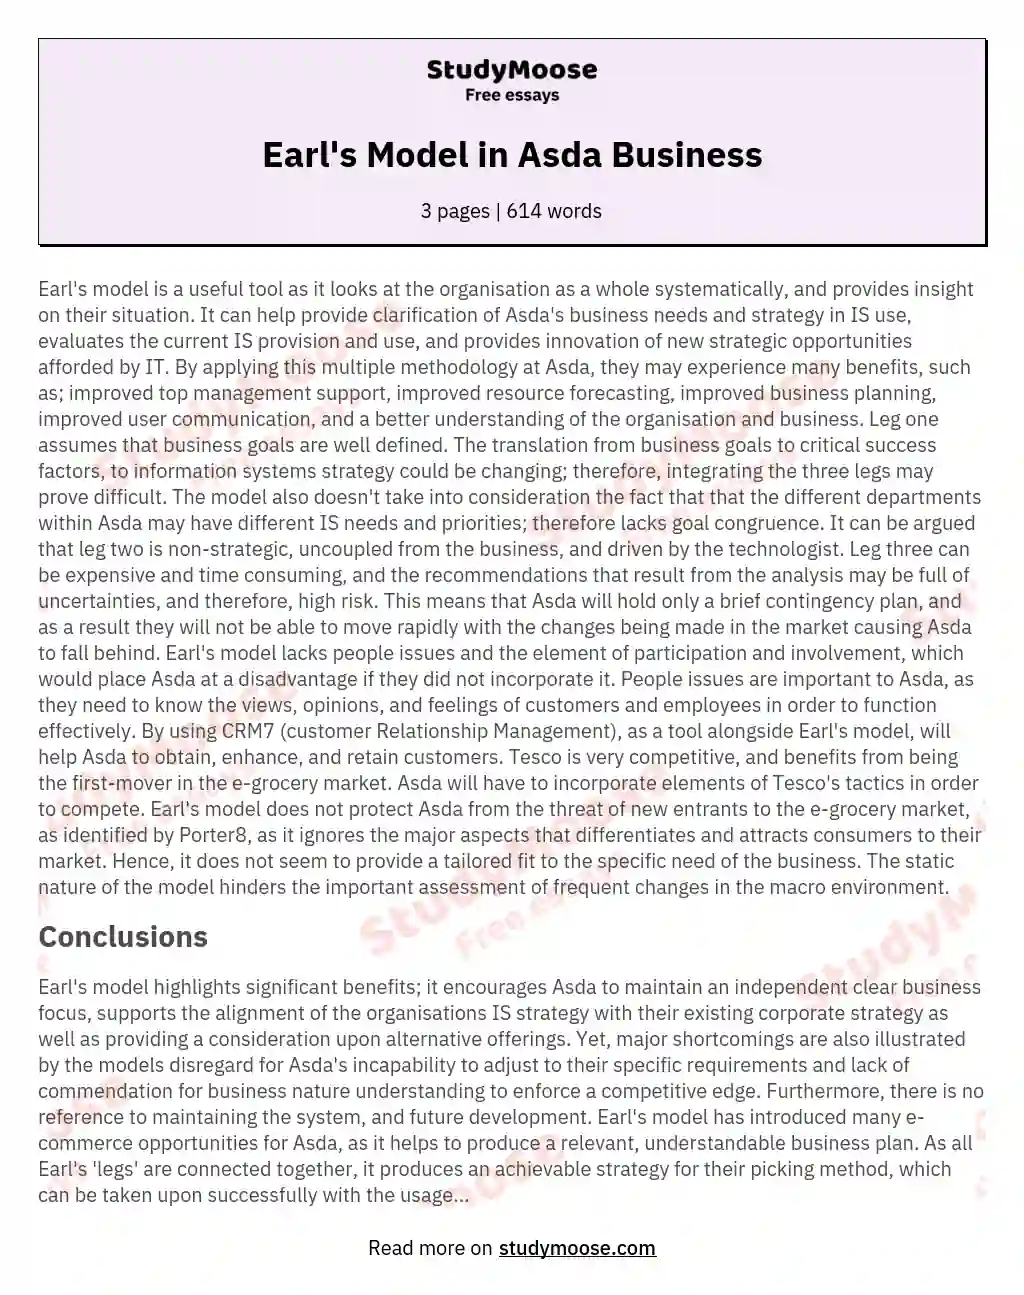 Earl's Model in Asda Business essay